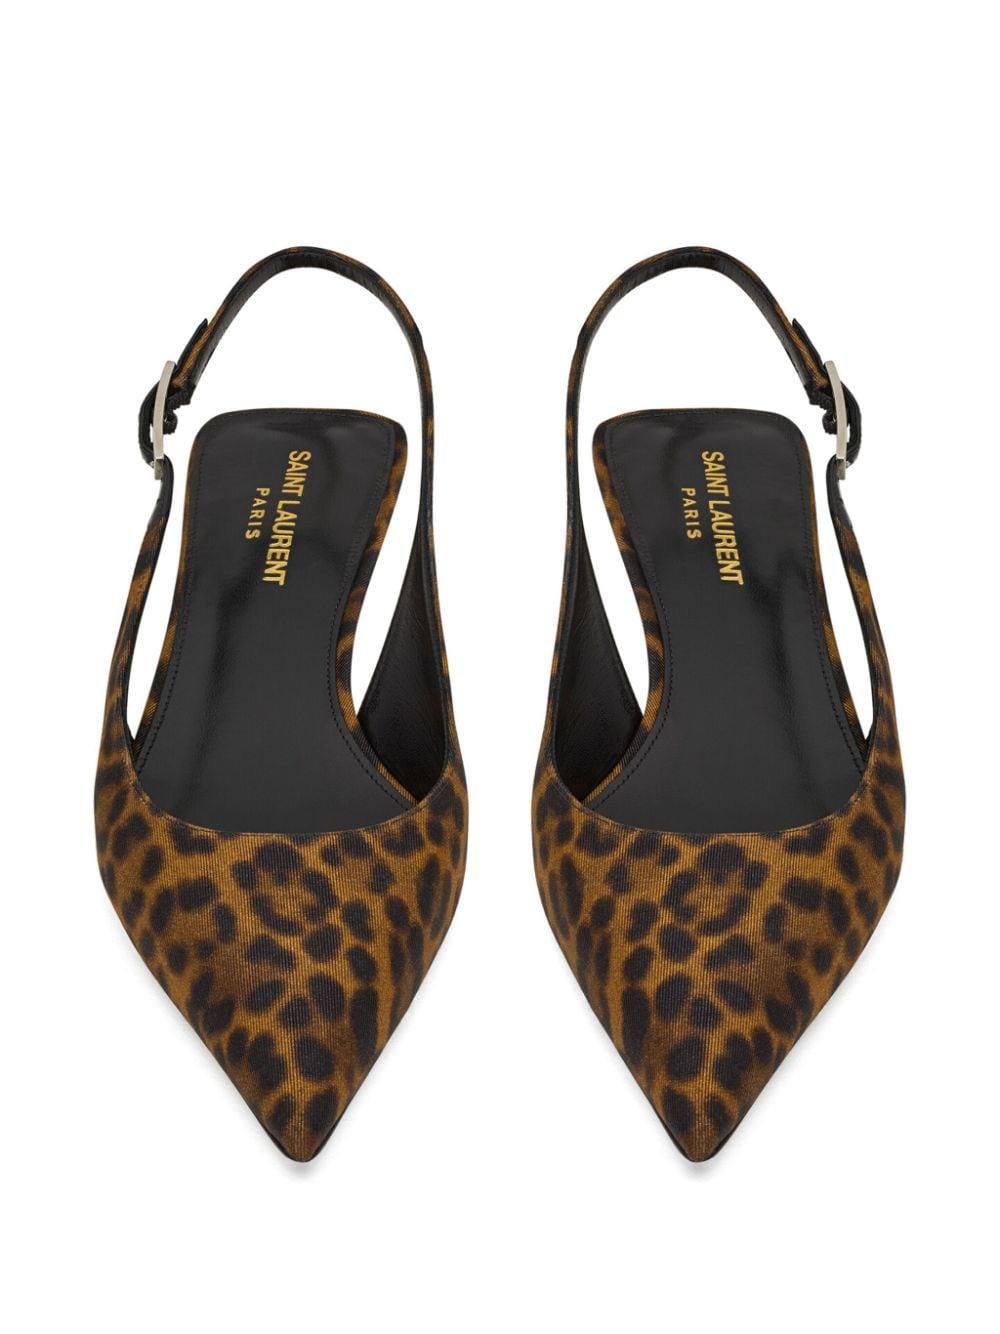 SAINT LAURENT Cherish 35mm Leopard Print Sandals for Women in Brown